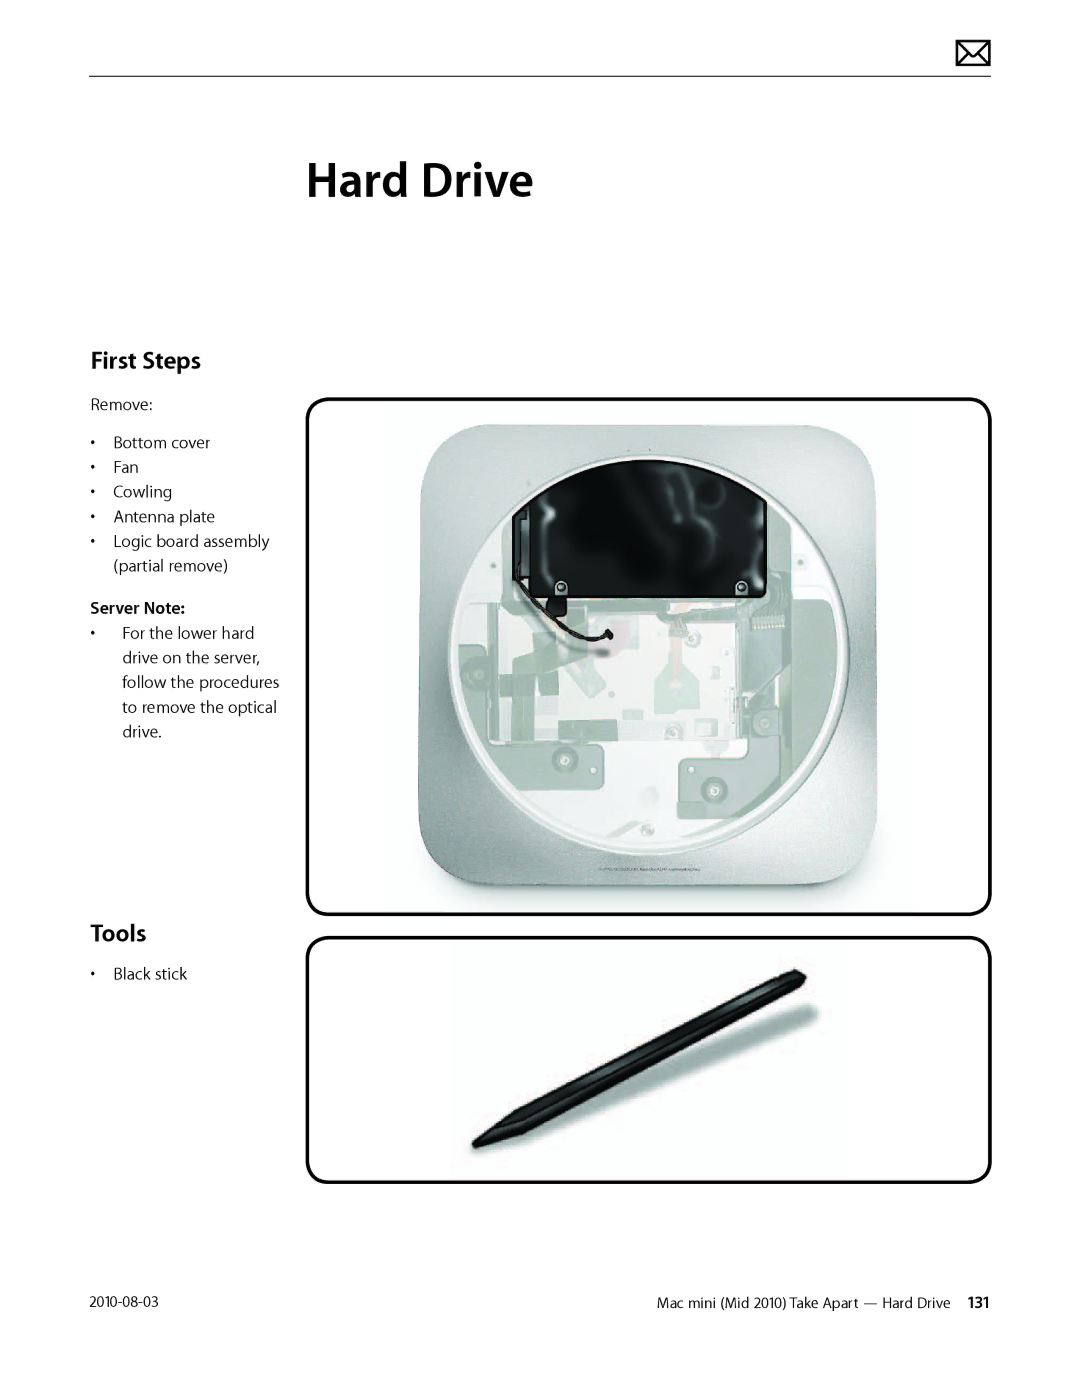 Apple Mac mini manual Hard Drive, Server Note 